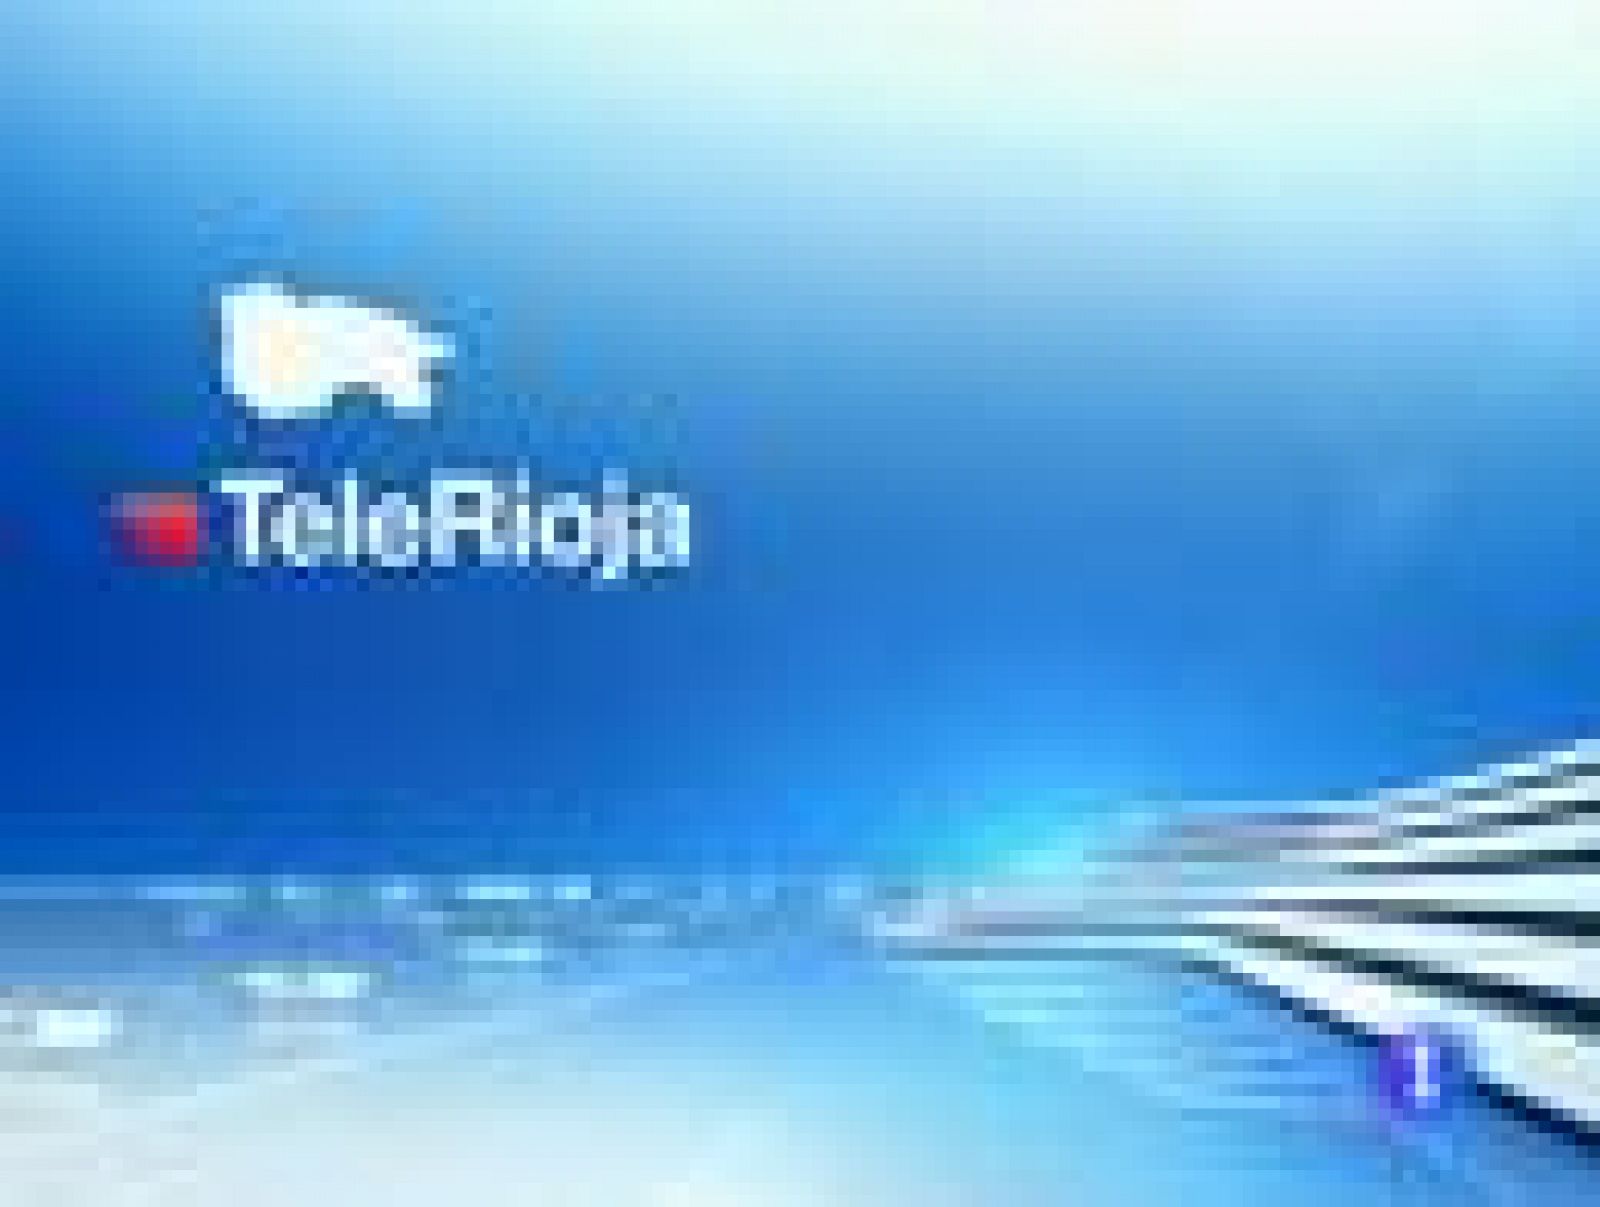 Informativo Telerioja: Informativo Telerioja - 15/11/13 | RTVE Play